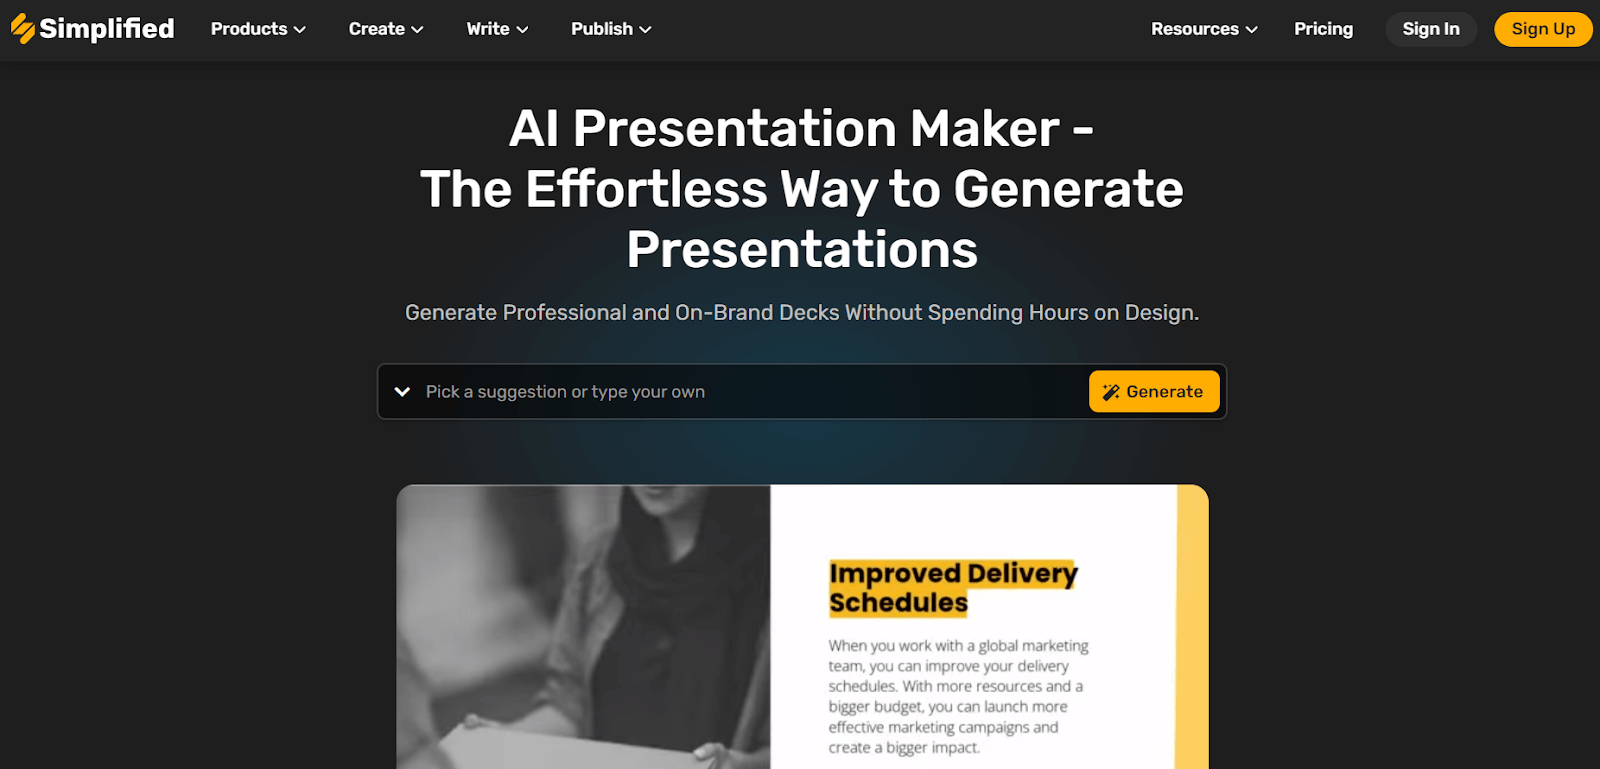 simplified website - the effortless way to generate presentations